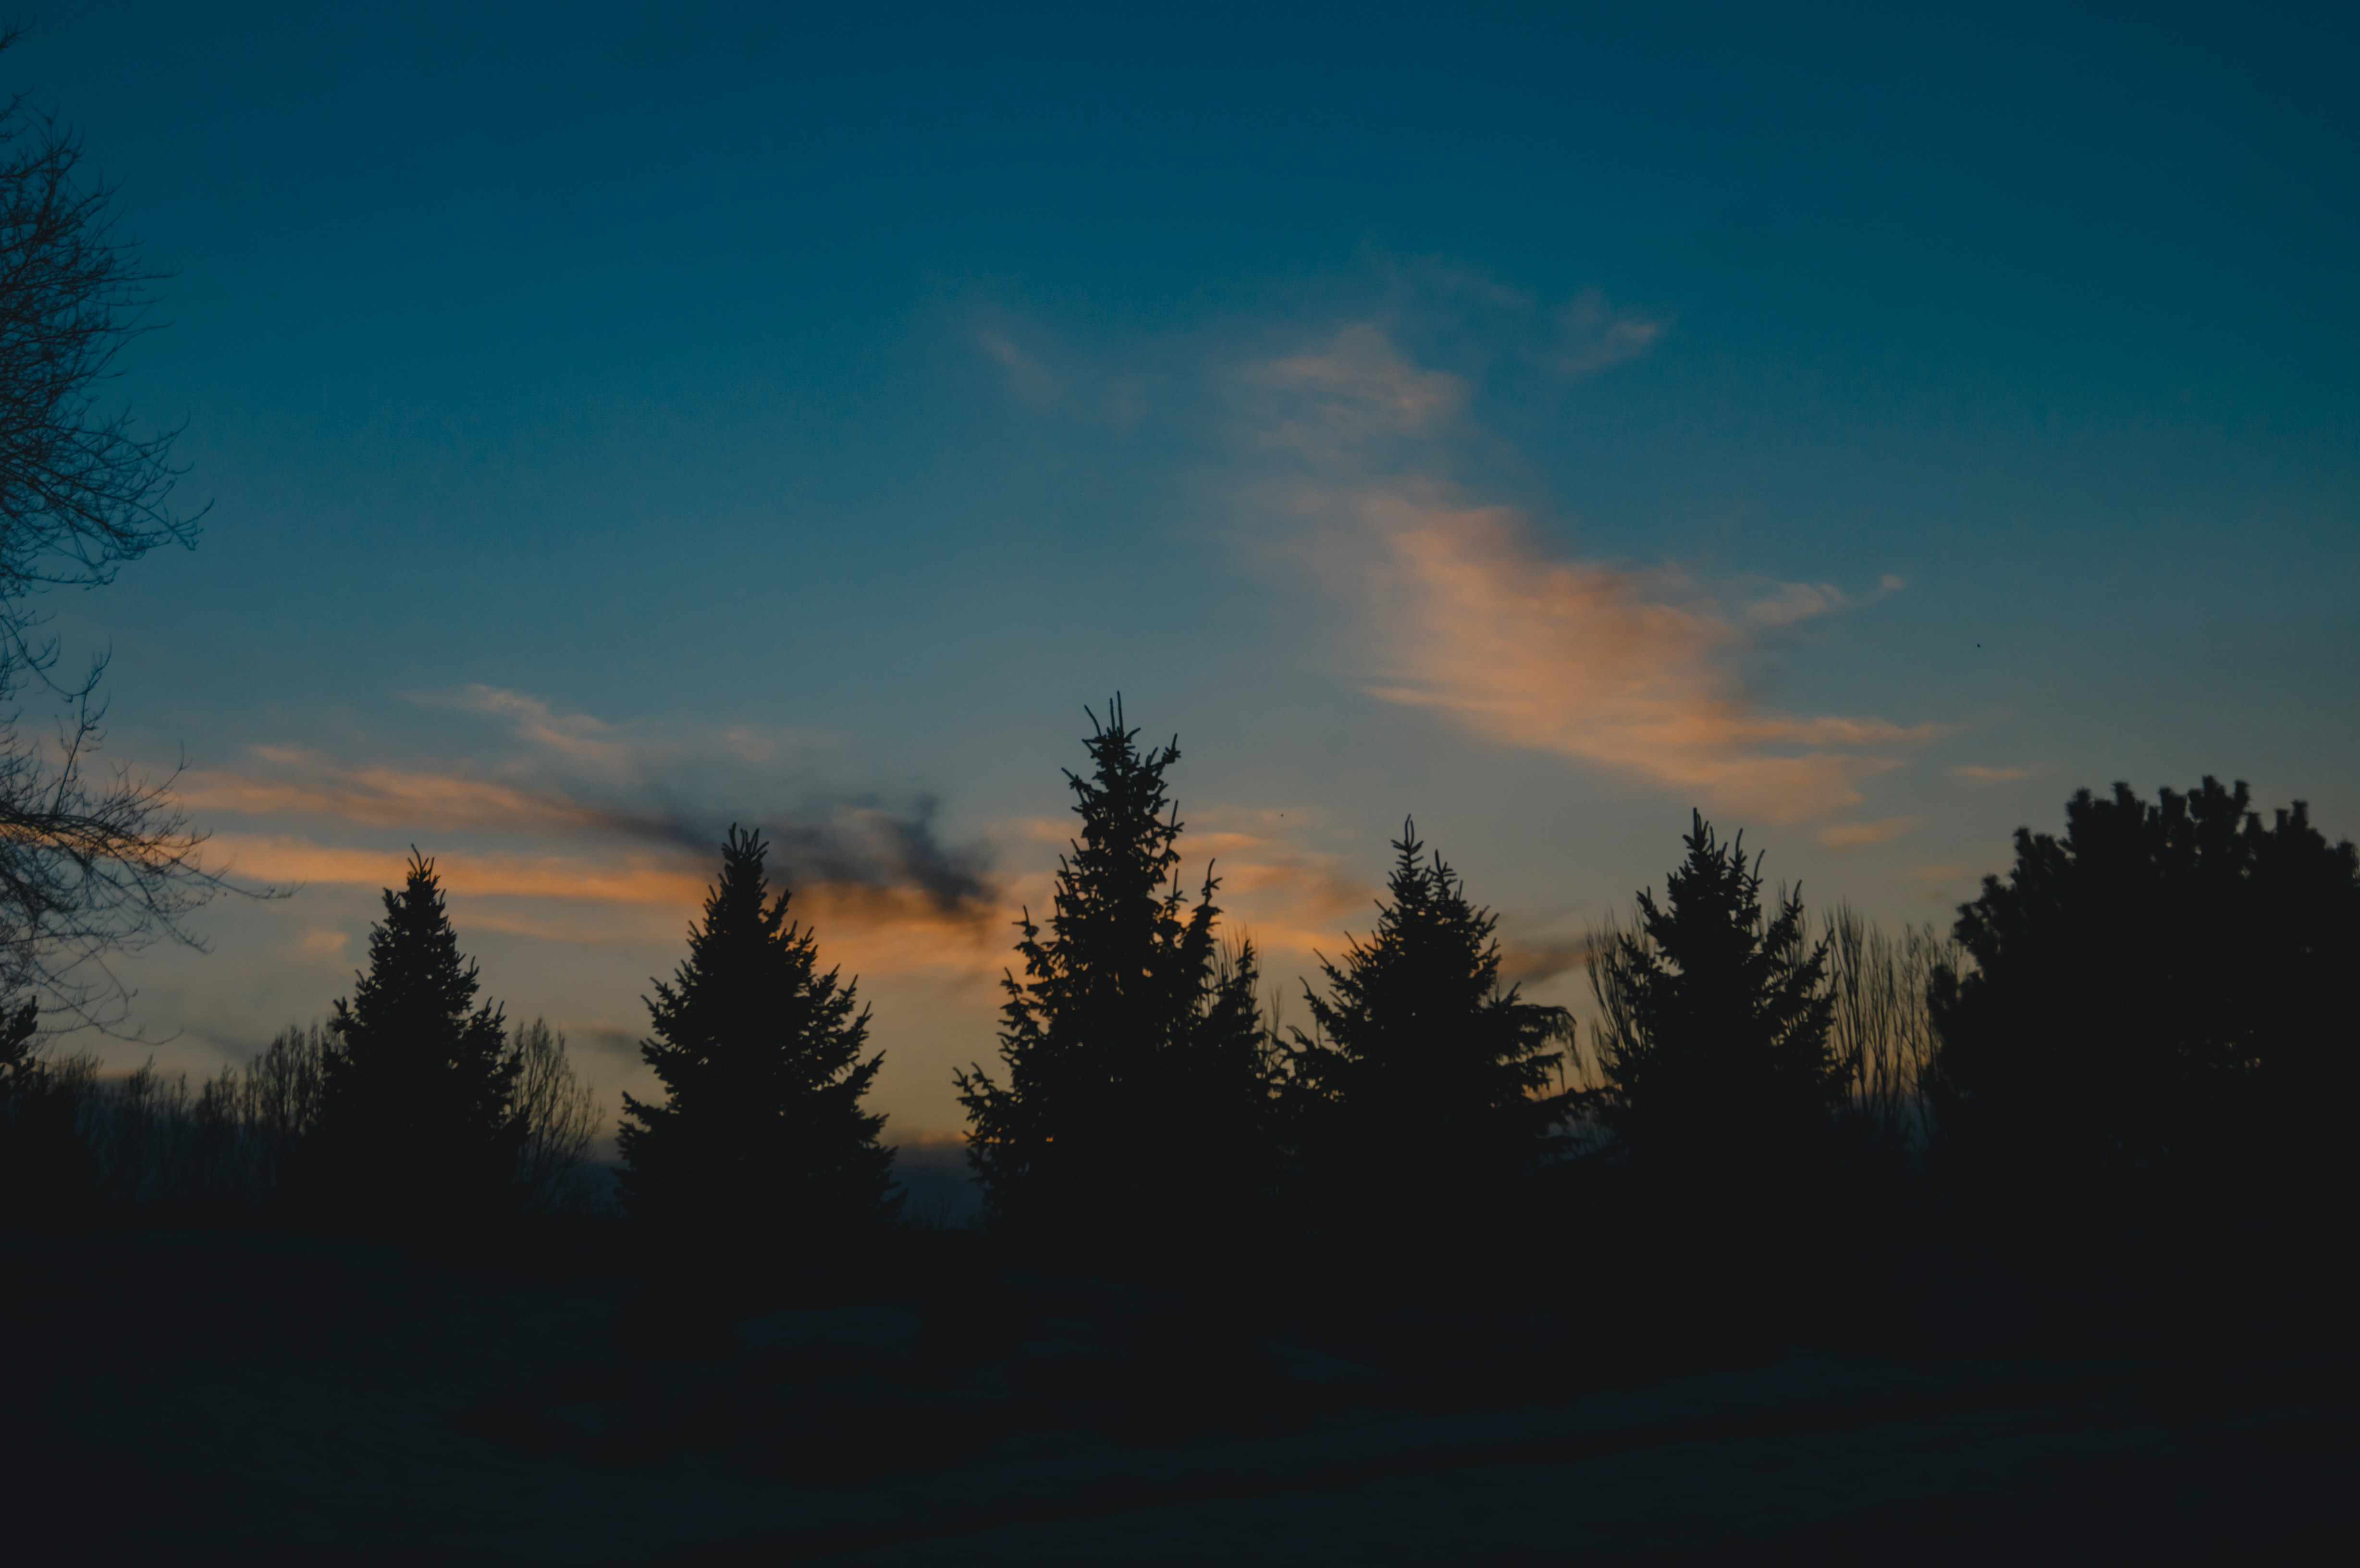 Pine trees at sunset; image by Vlad Panov, via Unsplash.com.